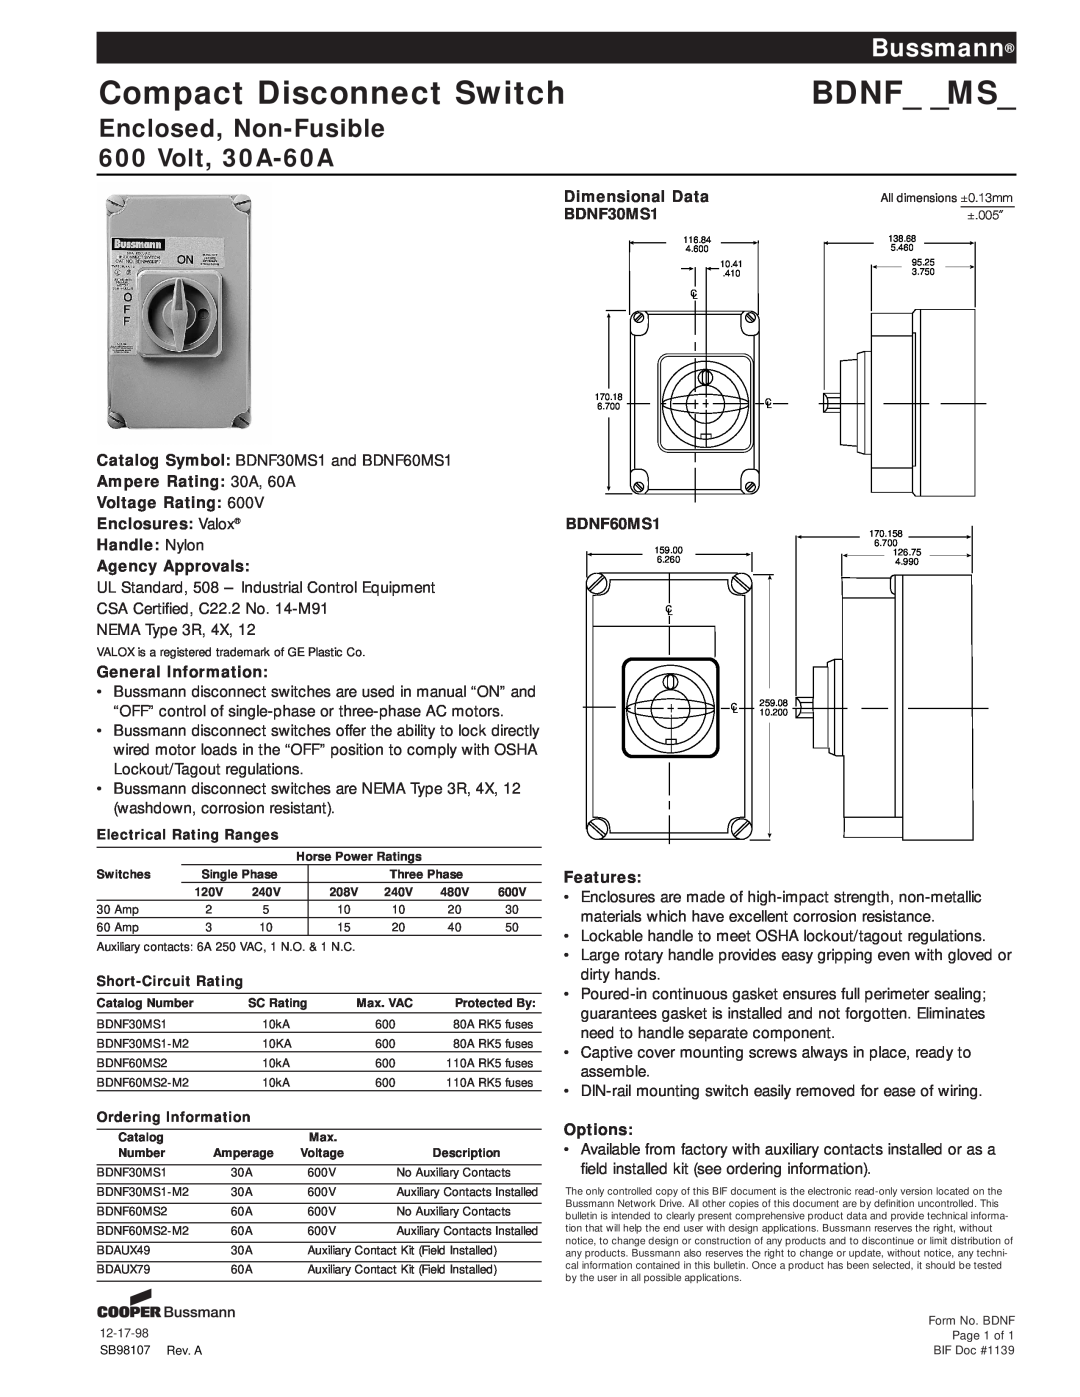 Cooper Bussmann dimensions Compact Disconnect Switch, Bdnf Ms, Bussmann, Enclosed, Non-Fusible 600 Volt, 30A-60A 